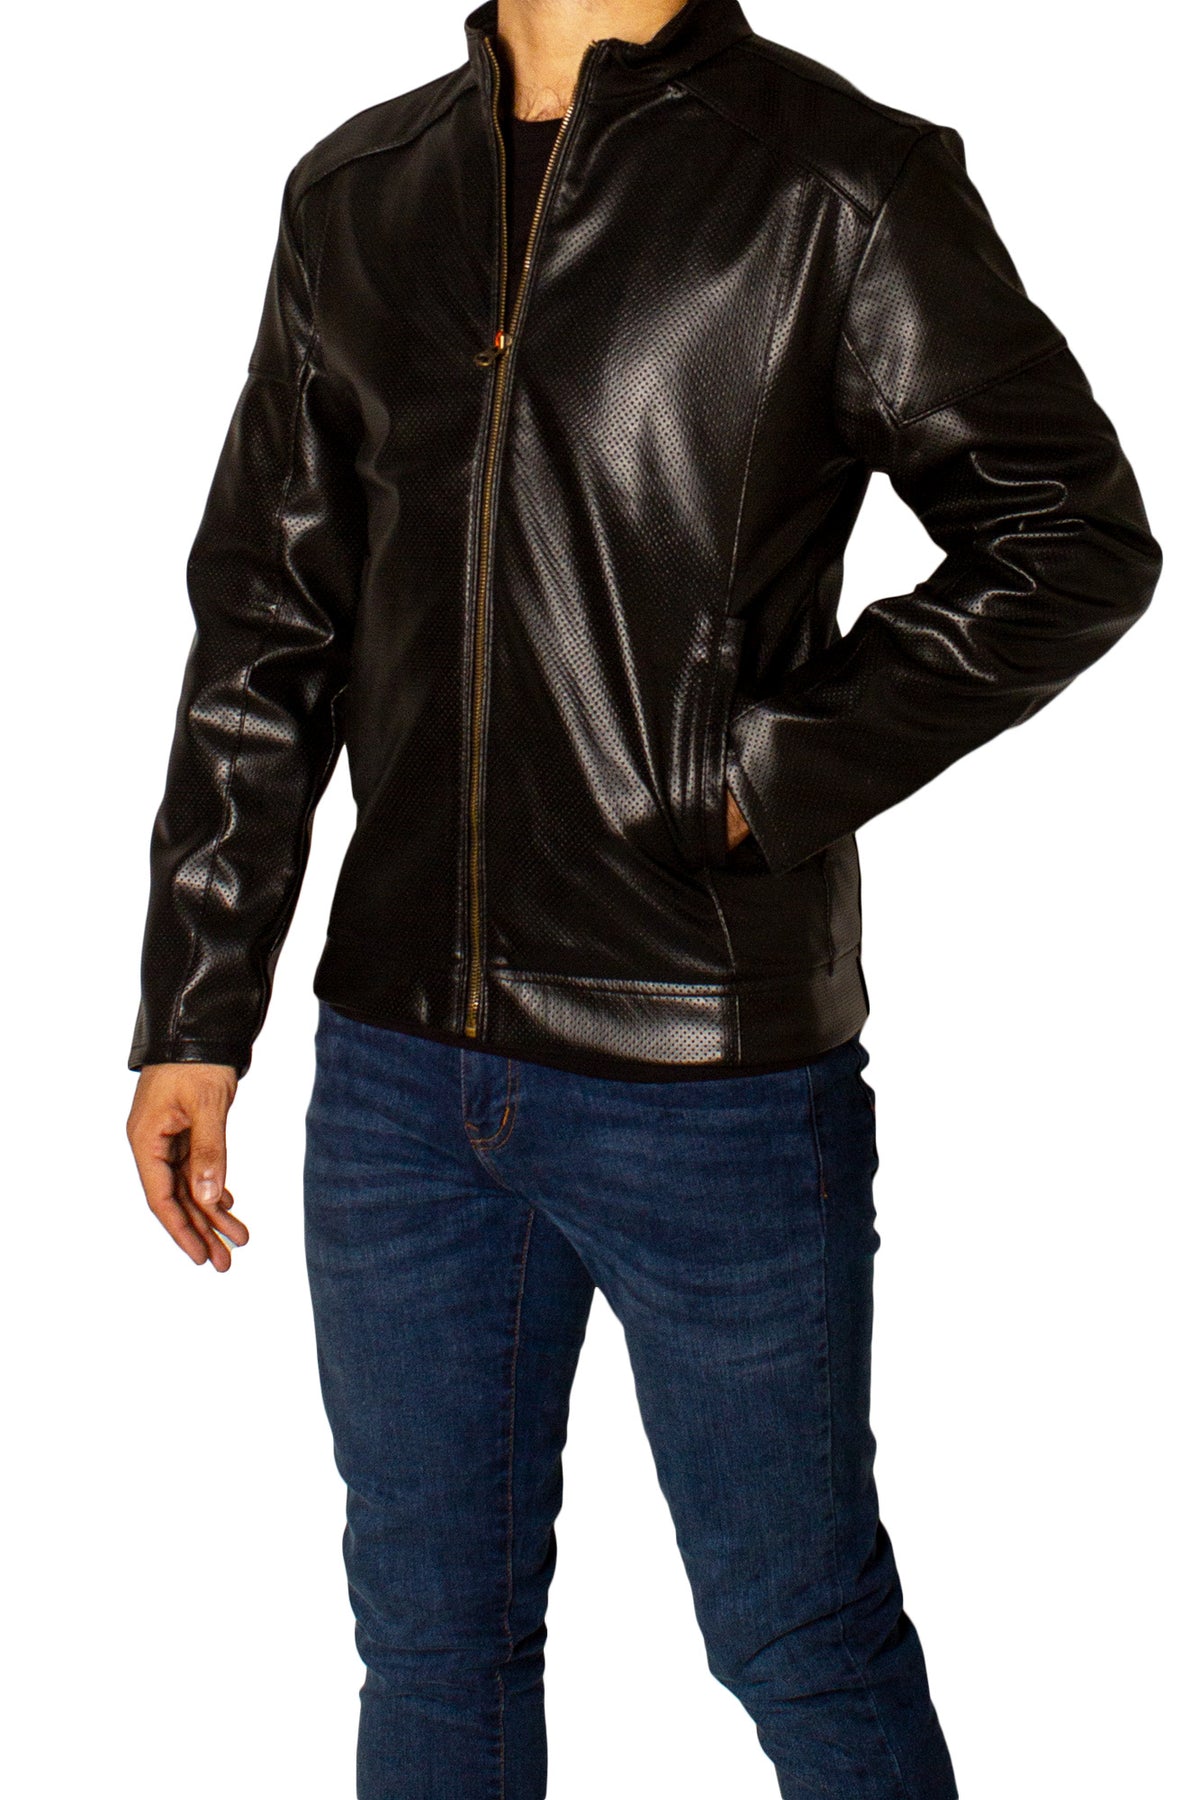 Men's Faux Leather Jacket Jk-0286 Dotted Black